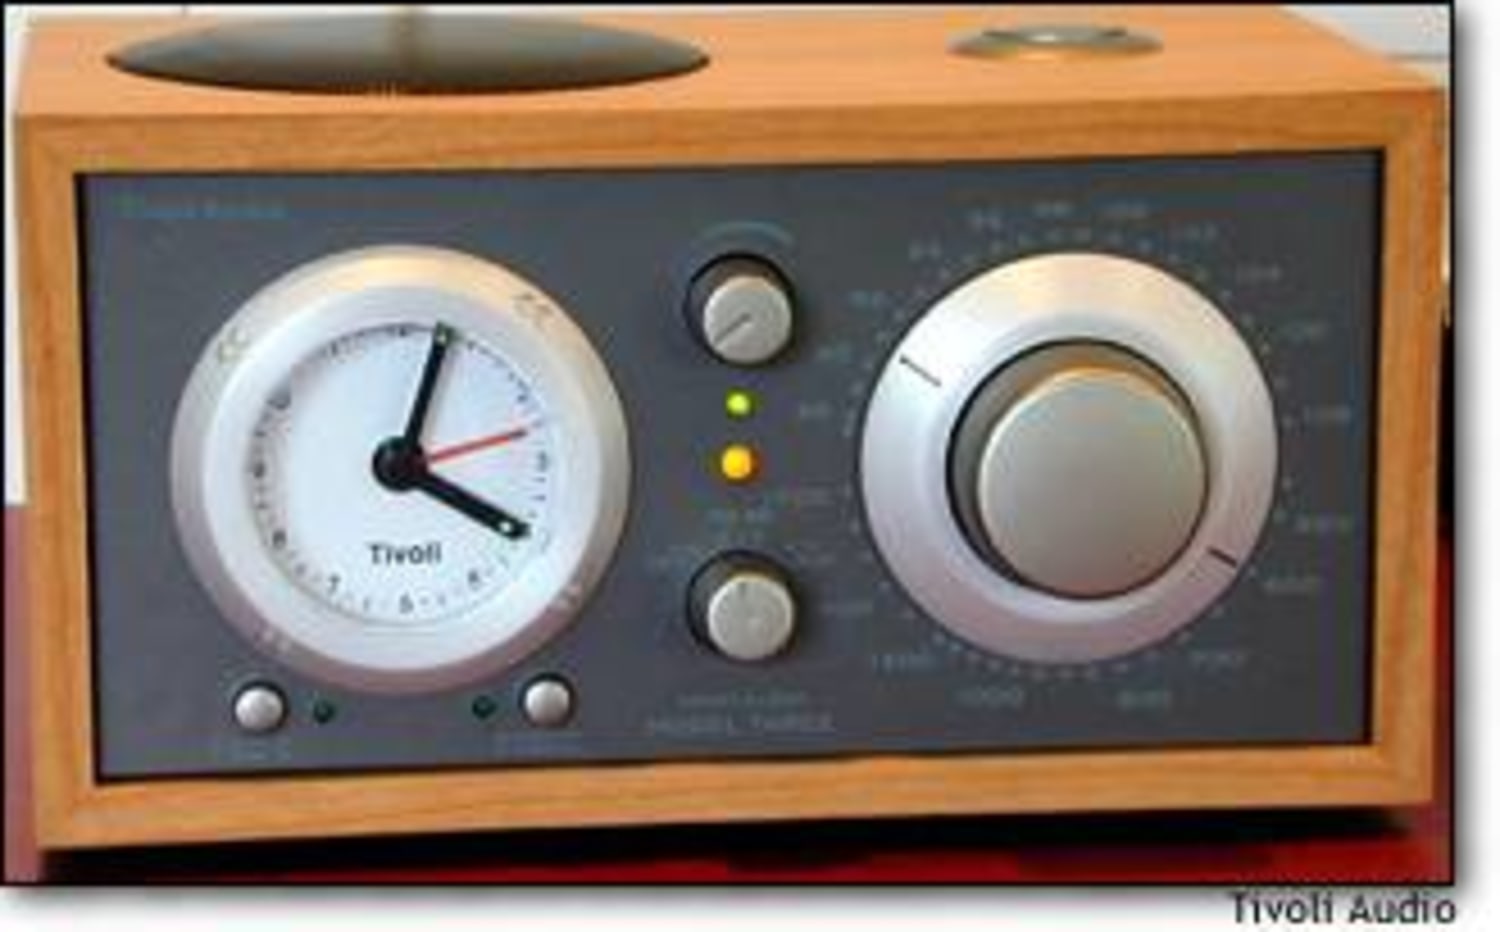 Review: Henry Kloss' clock radio